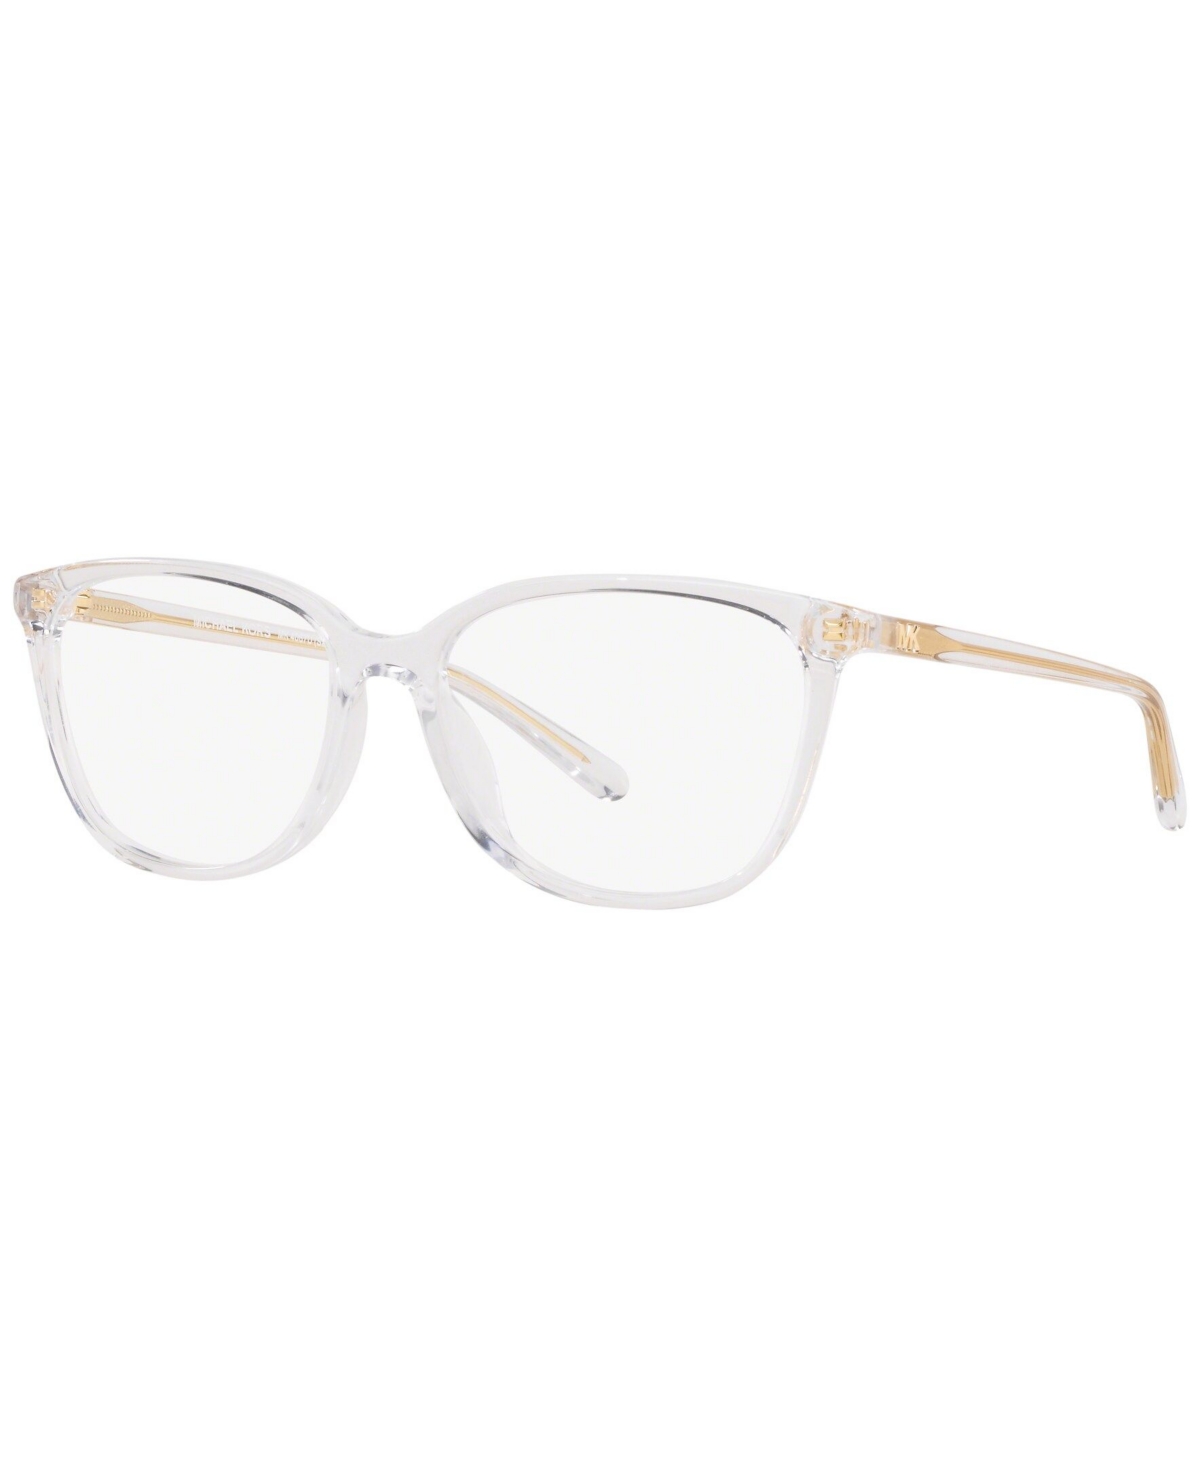 Women's Santa Clara Rectangle Eyeglasses, MK4067U55-o - Transparent